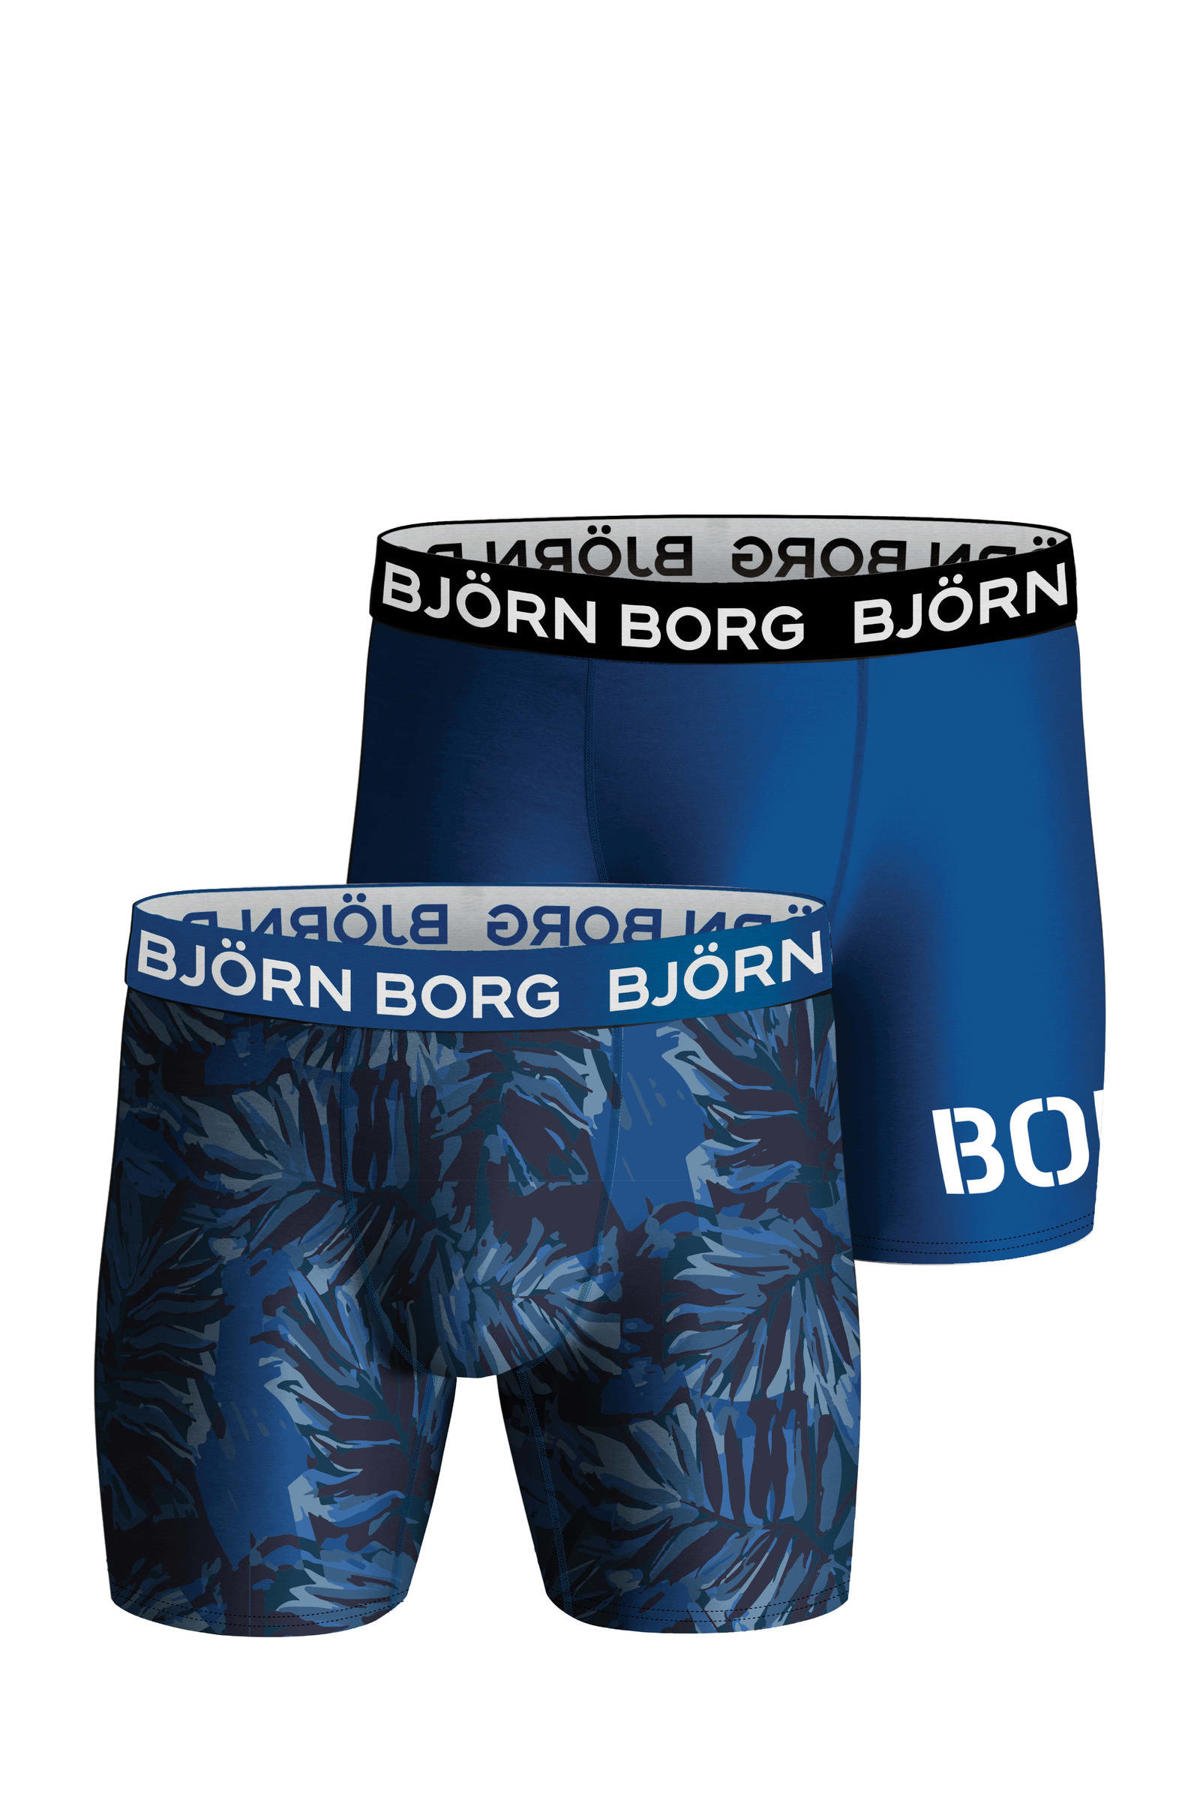 vertegenwoordiger slepen Londen Björn Borg microfiber boxershort (set van 2) | wehkamp